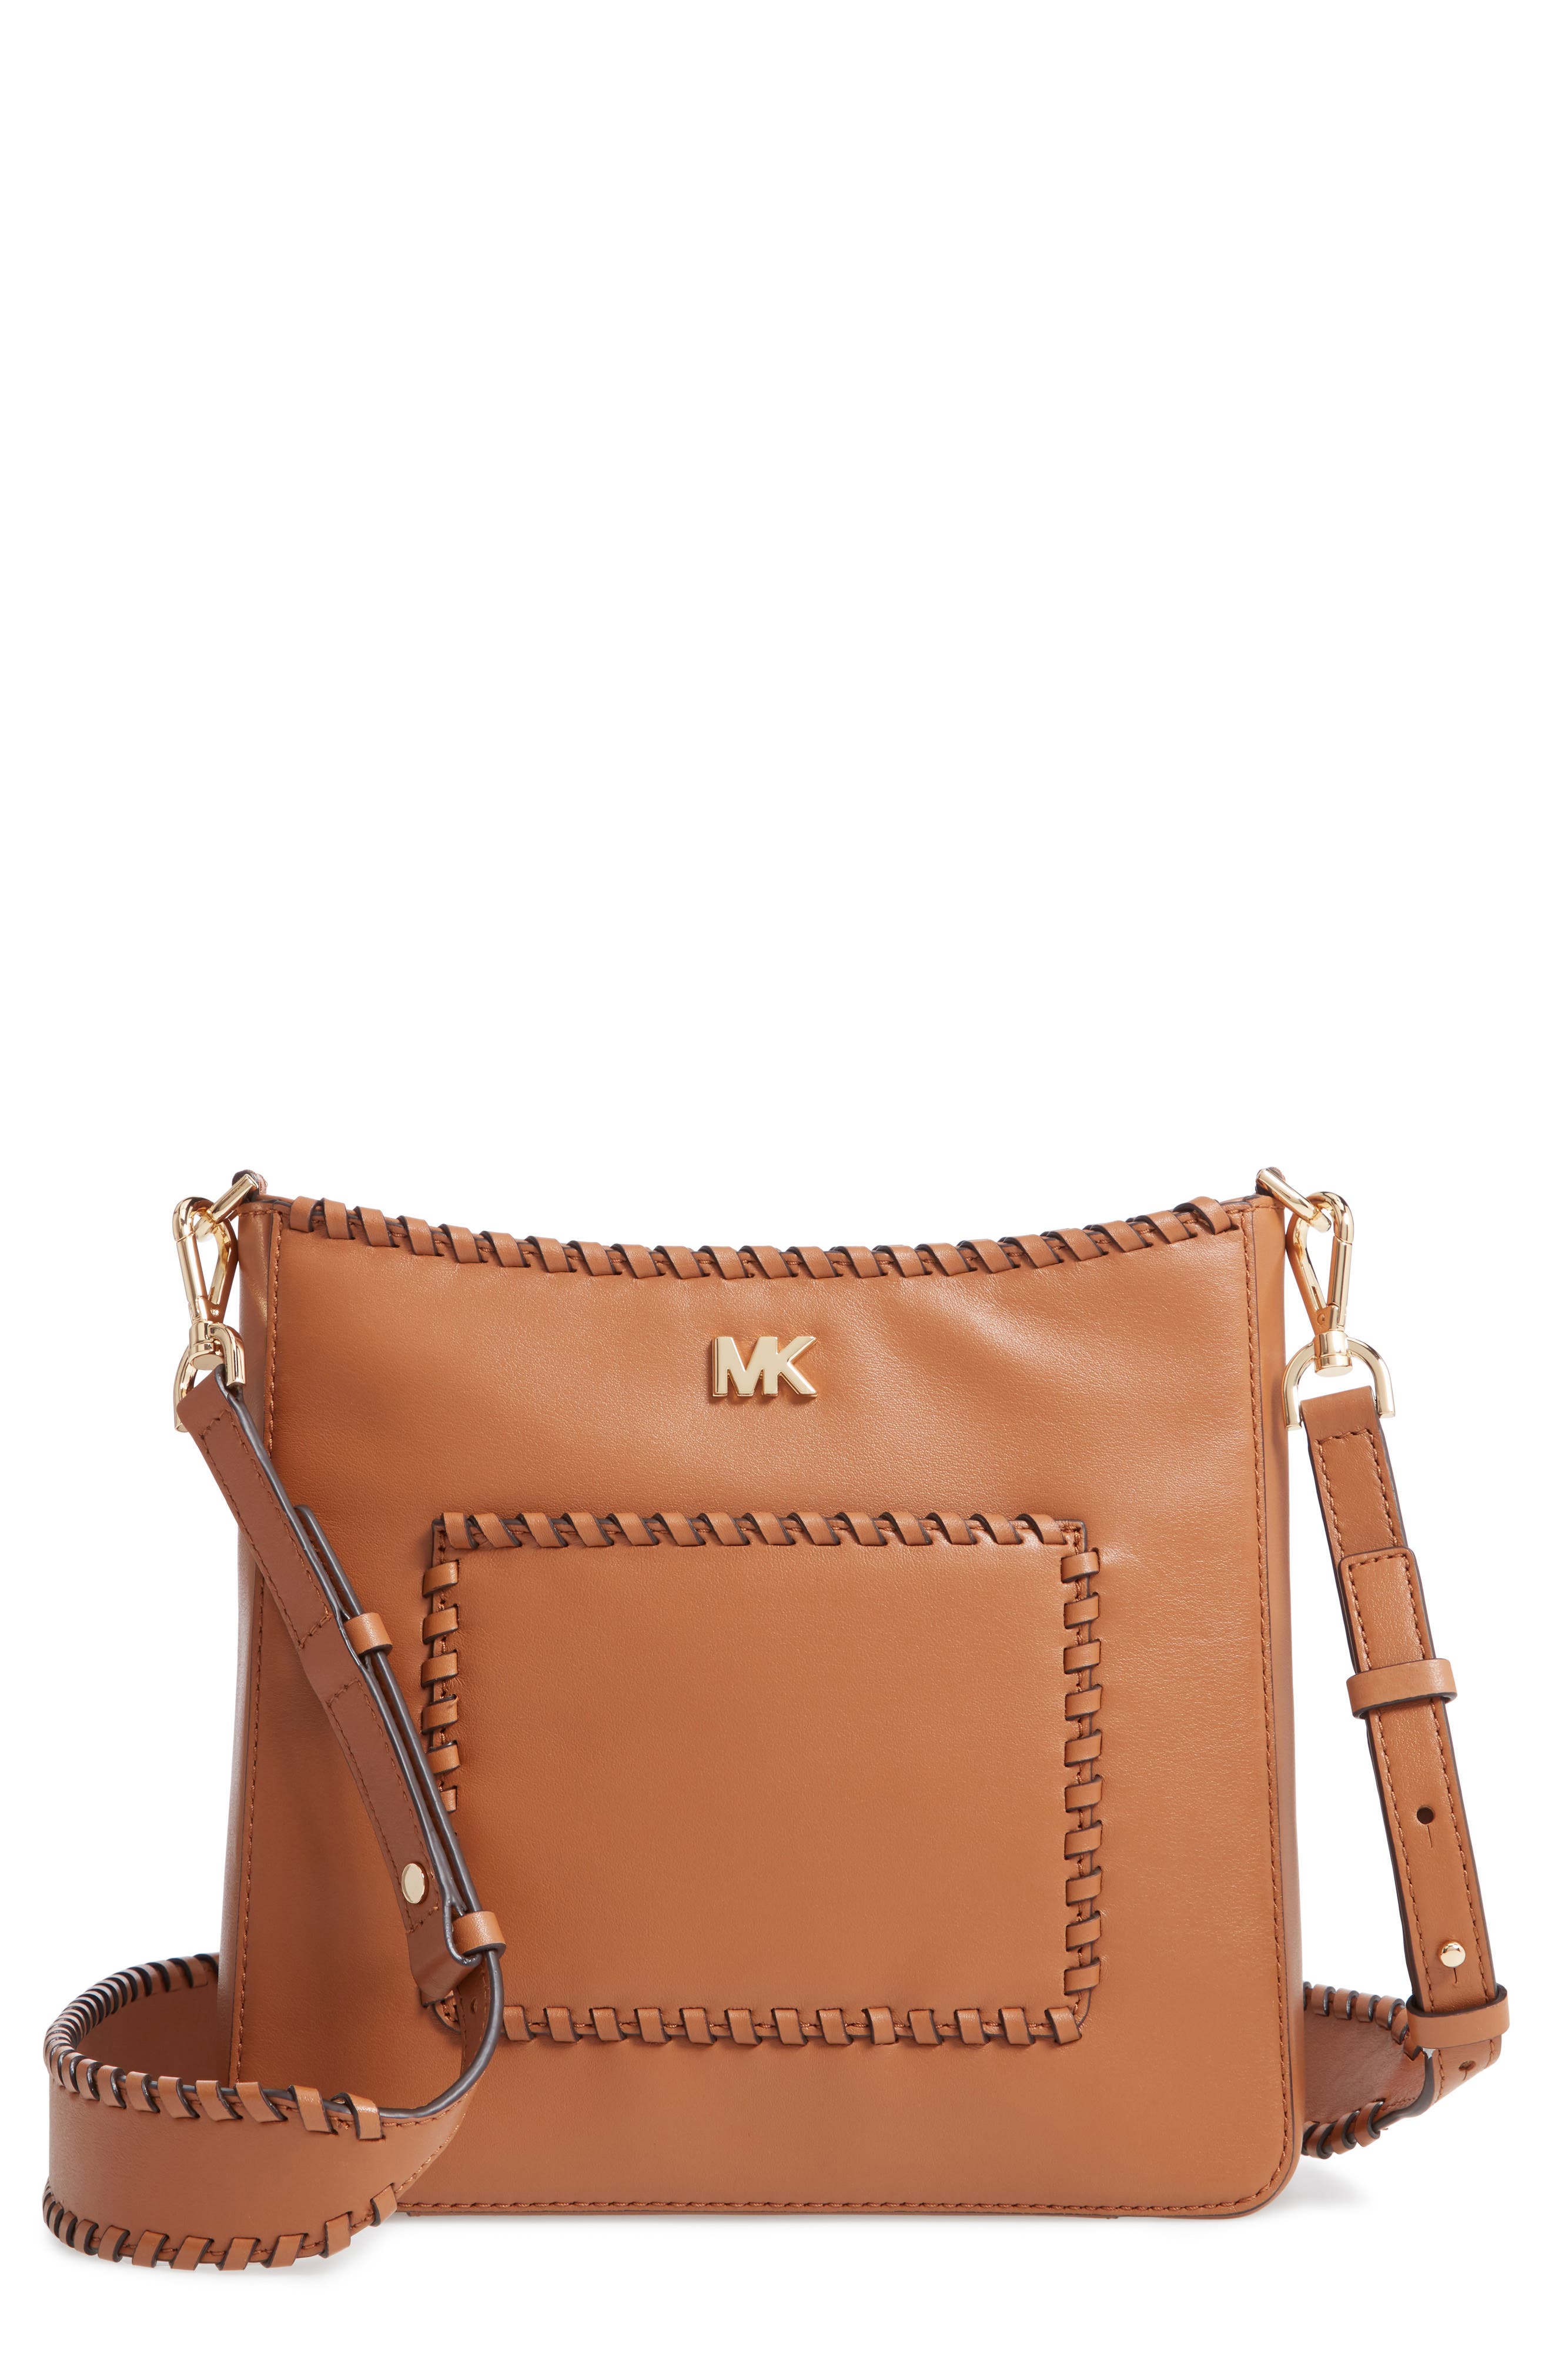 mk gloria bag